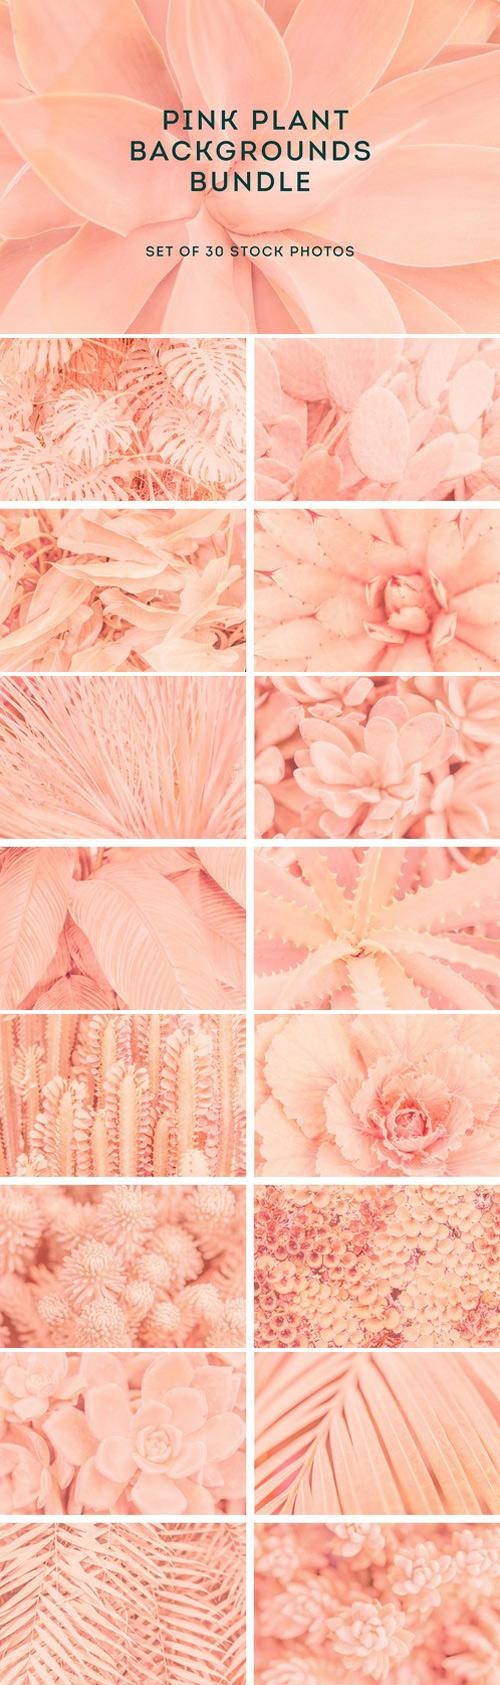 Pink backgrounds bundle 2229883